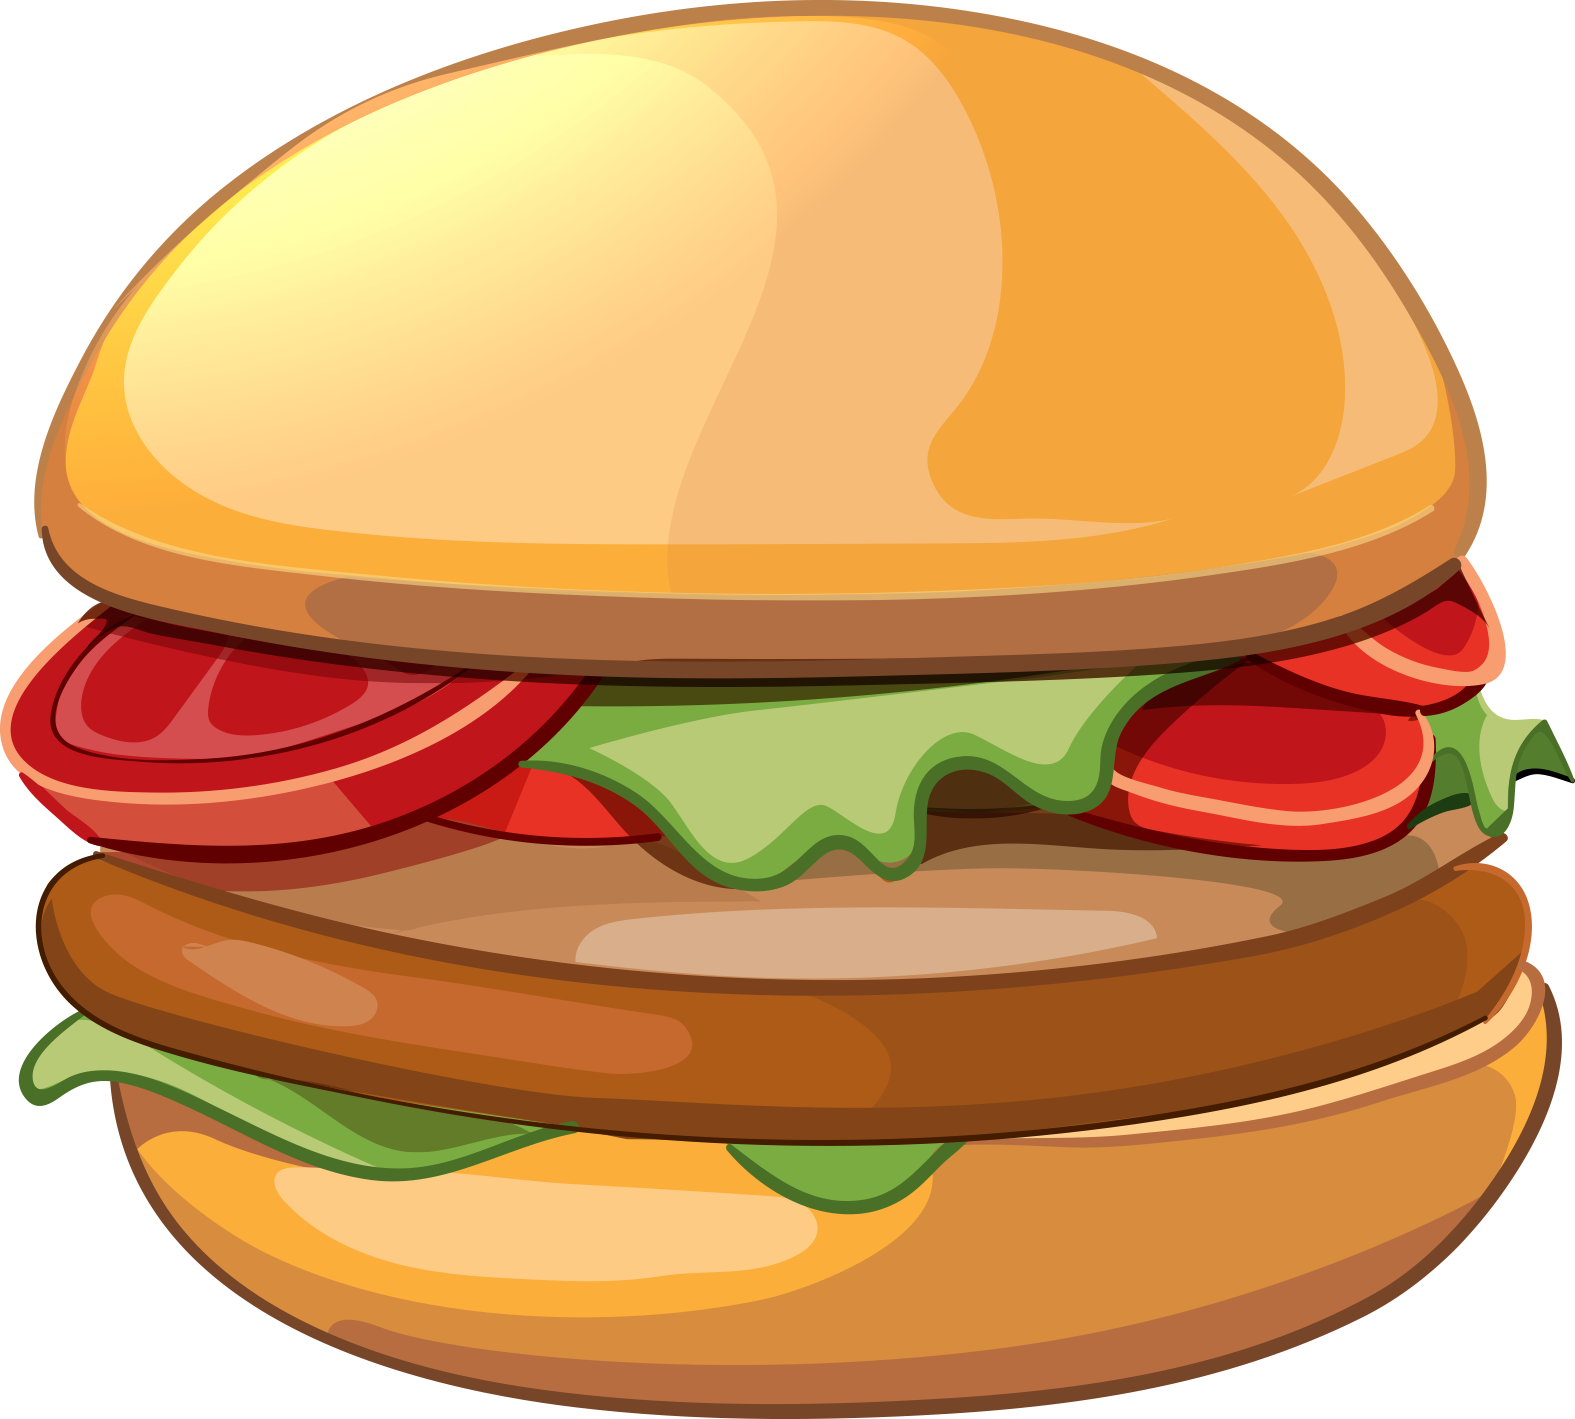 Classic Cartoon Hamburger Illustration